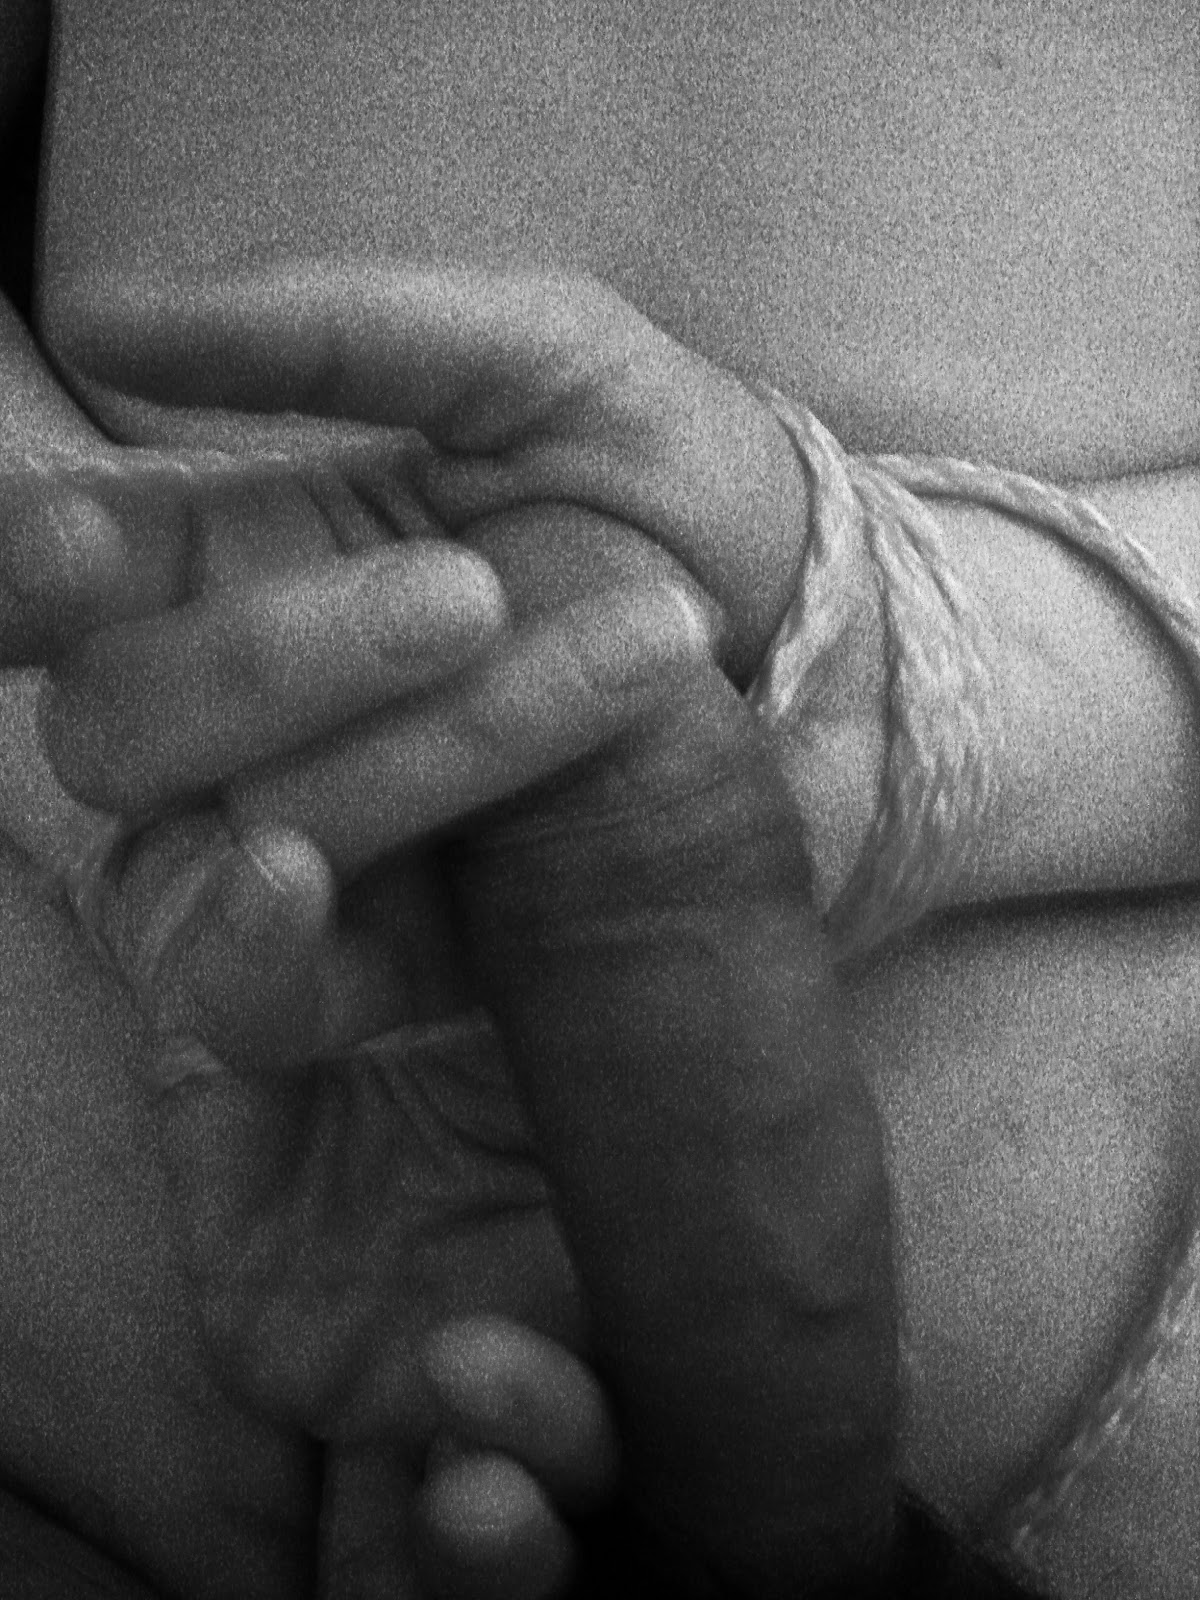 Black Hands White Pussy - White Eat Black Pussy Tied Up | BDSM Fetish